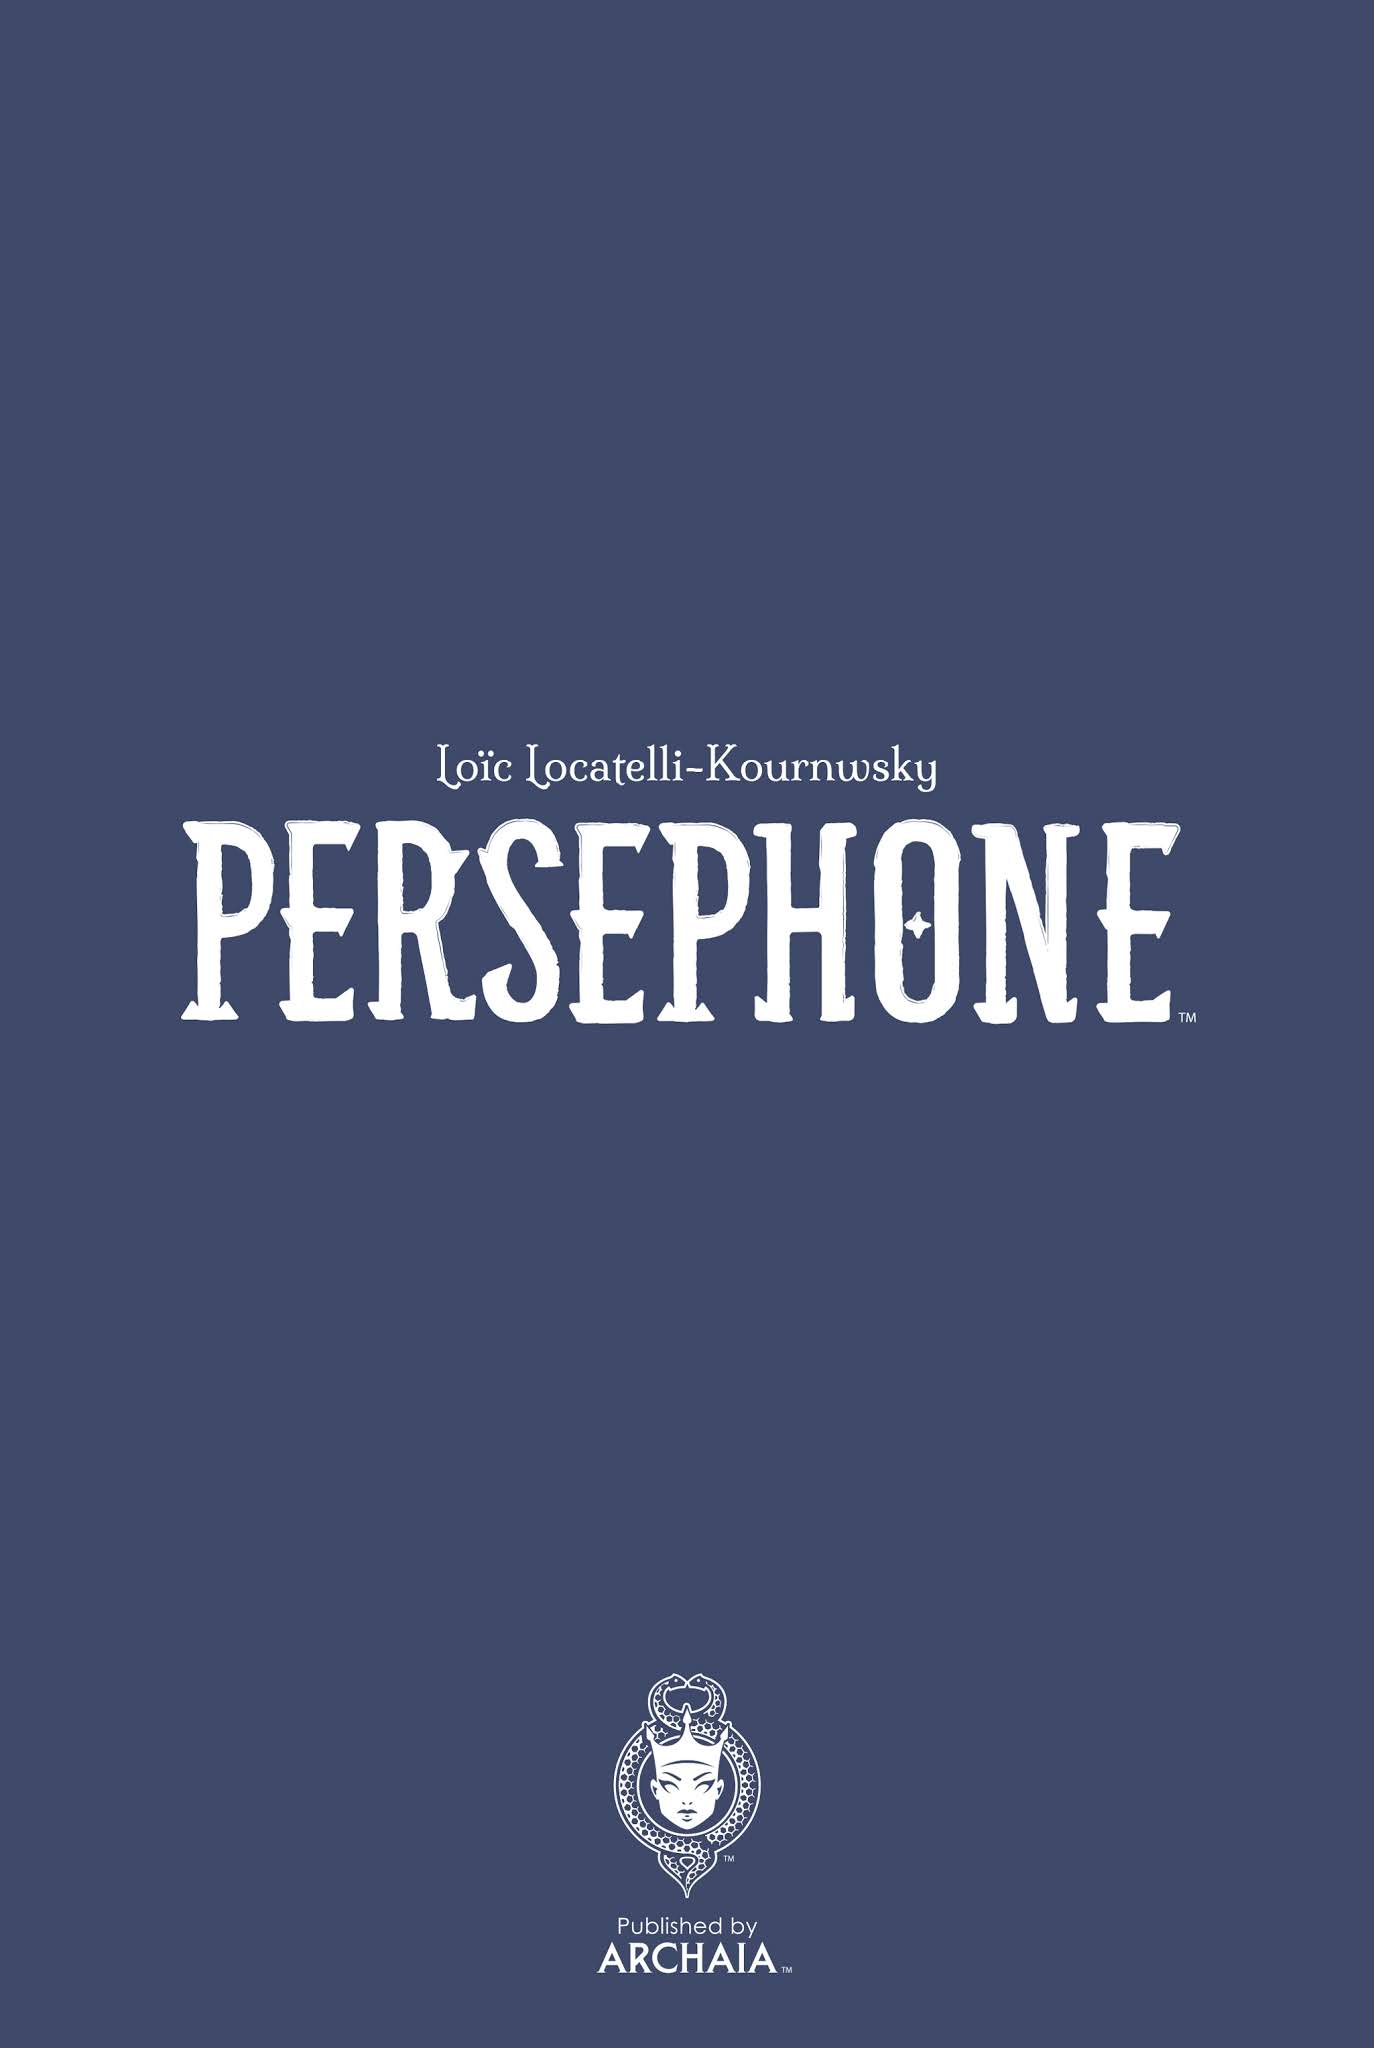 Read online Persephone comic -  Issue # TPB - 4